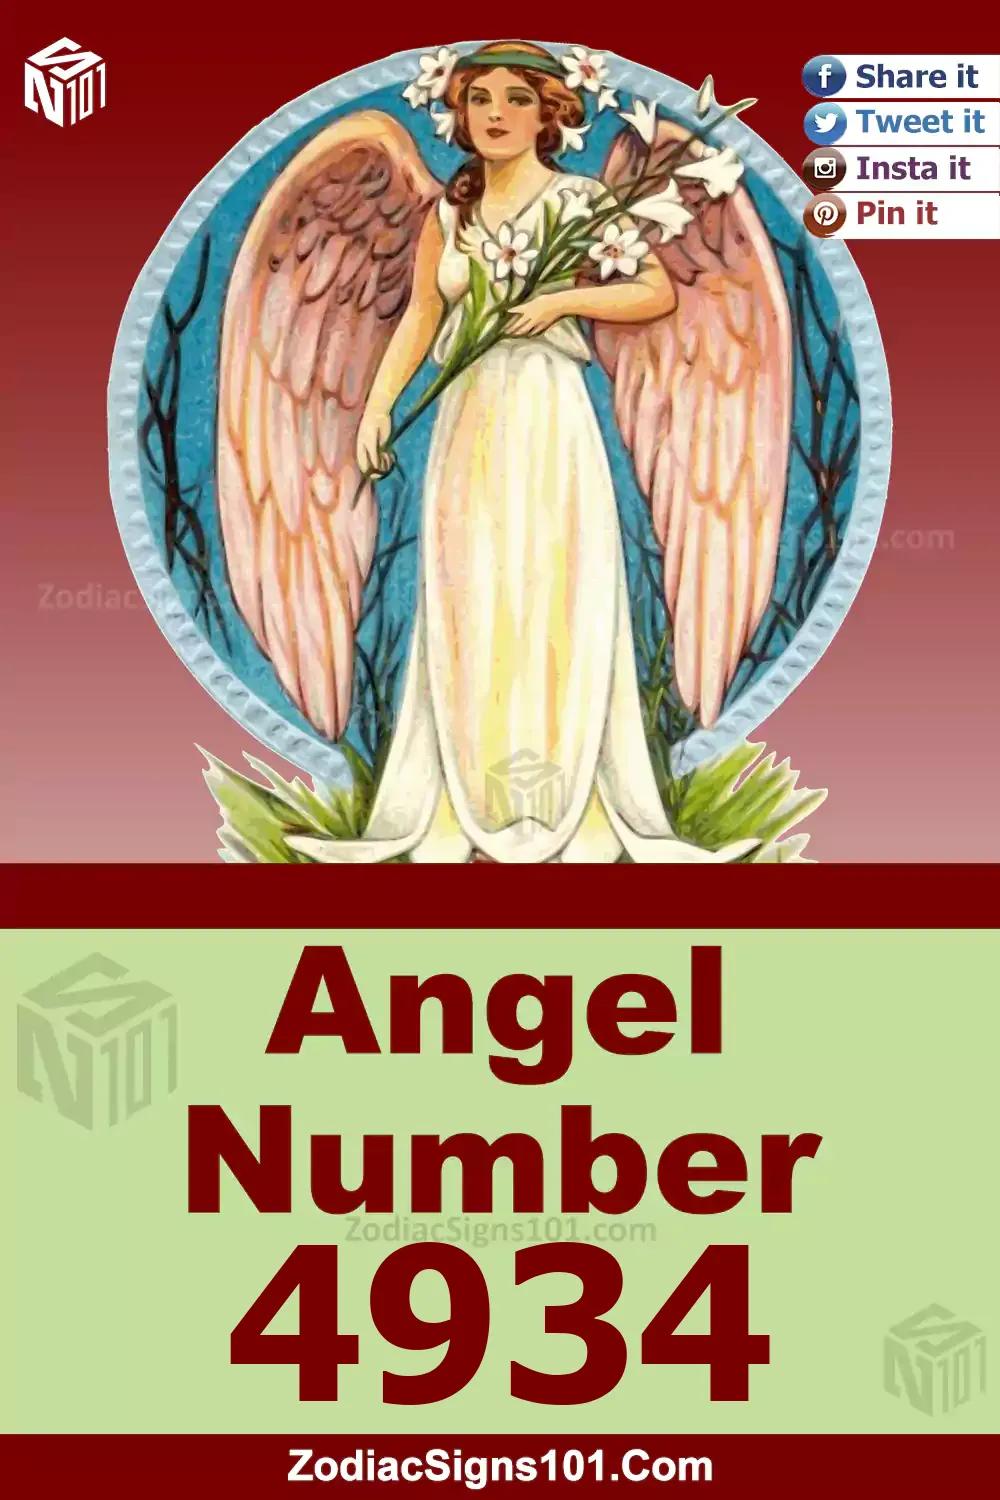 4934-Angel-Number-Meaning.jpg